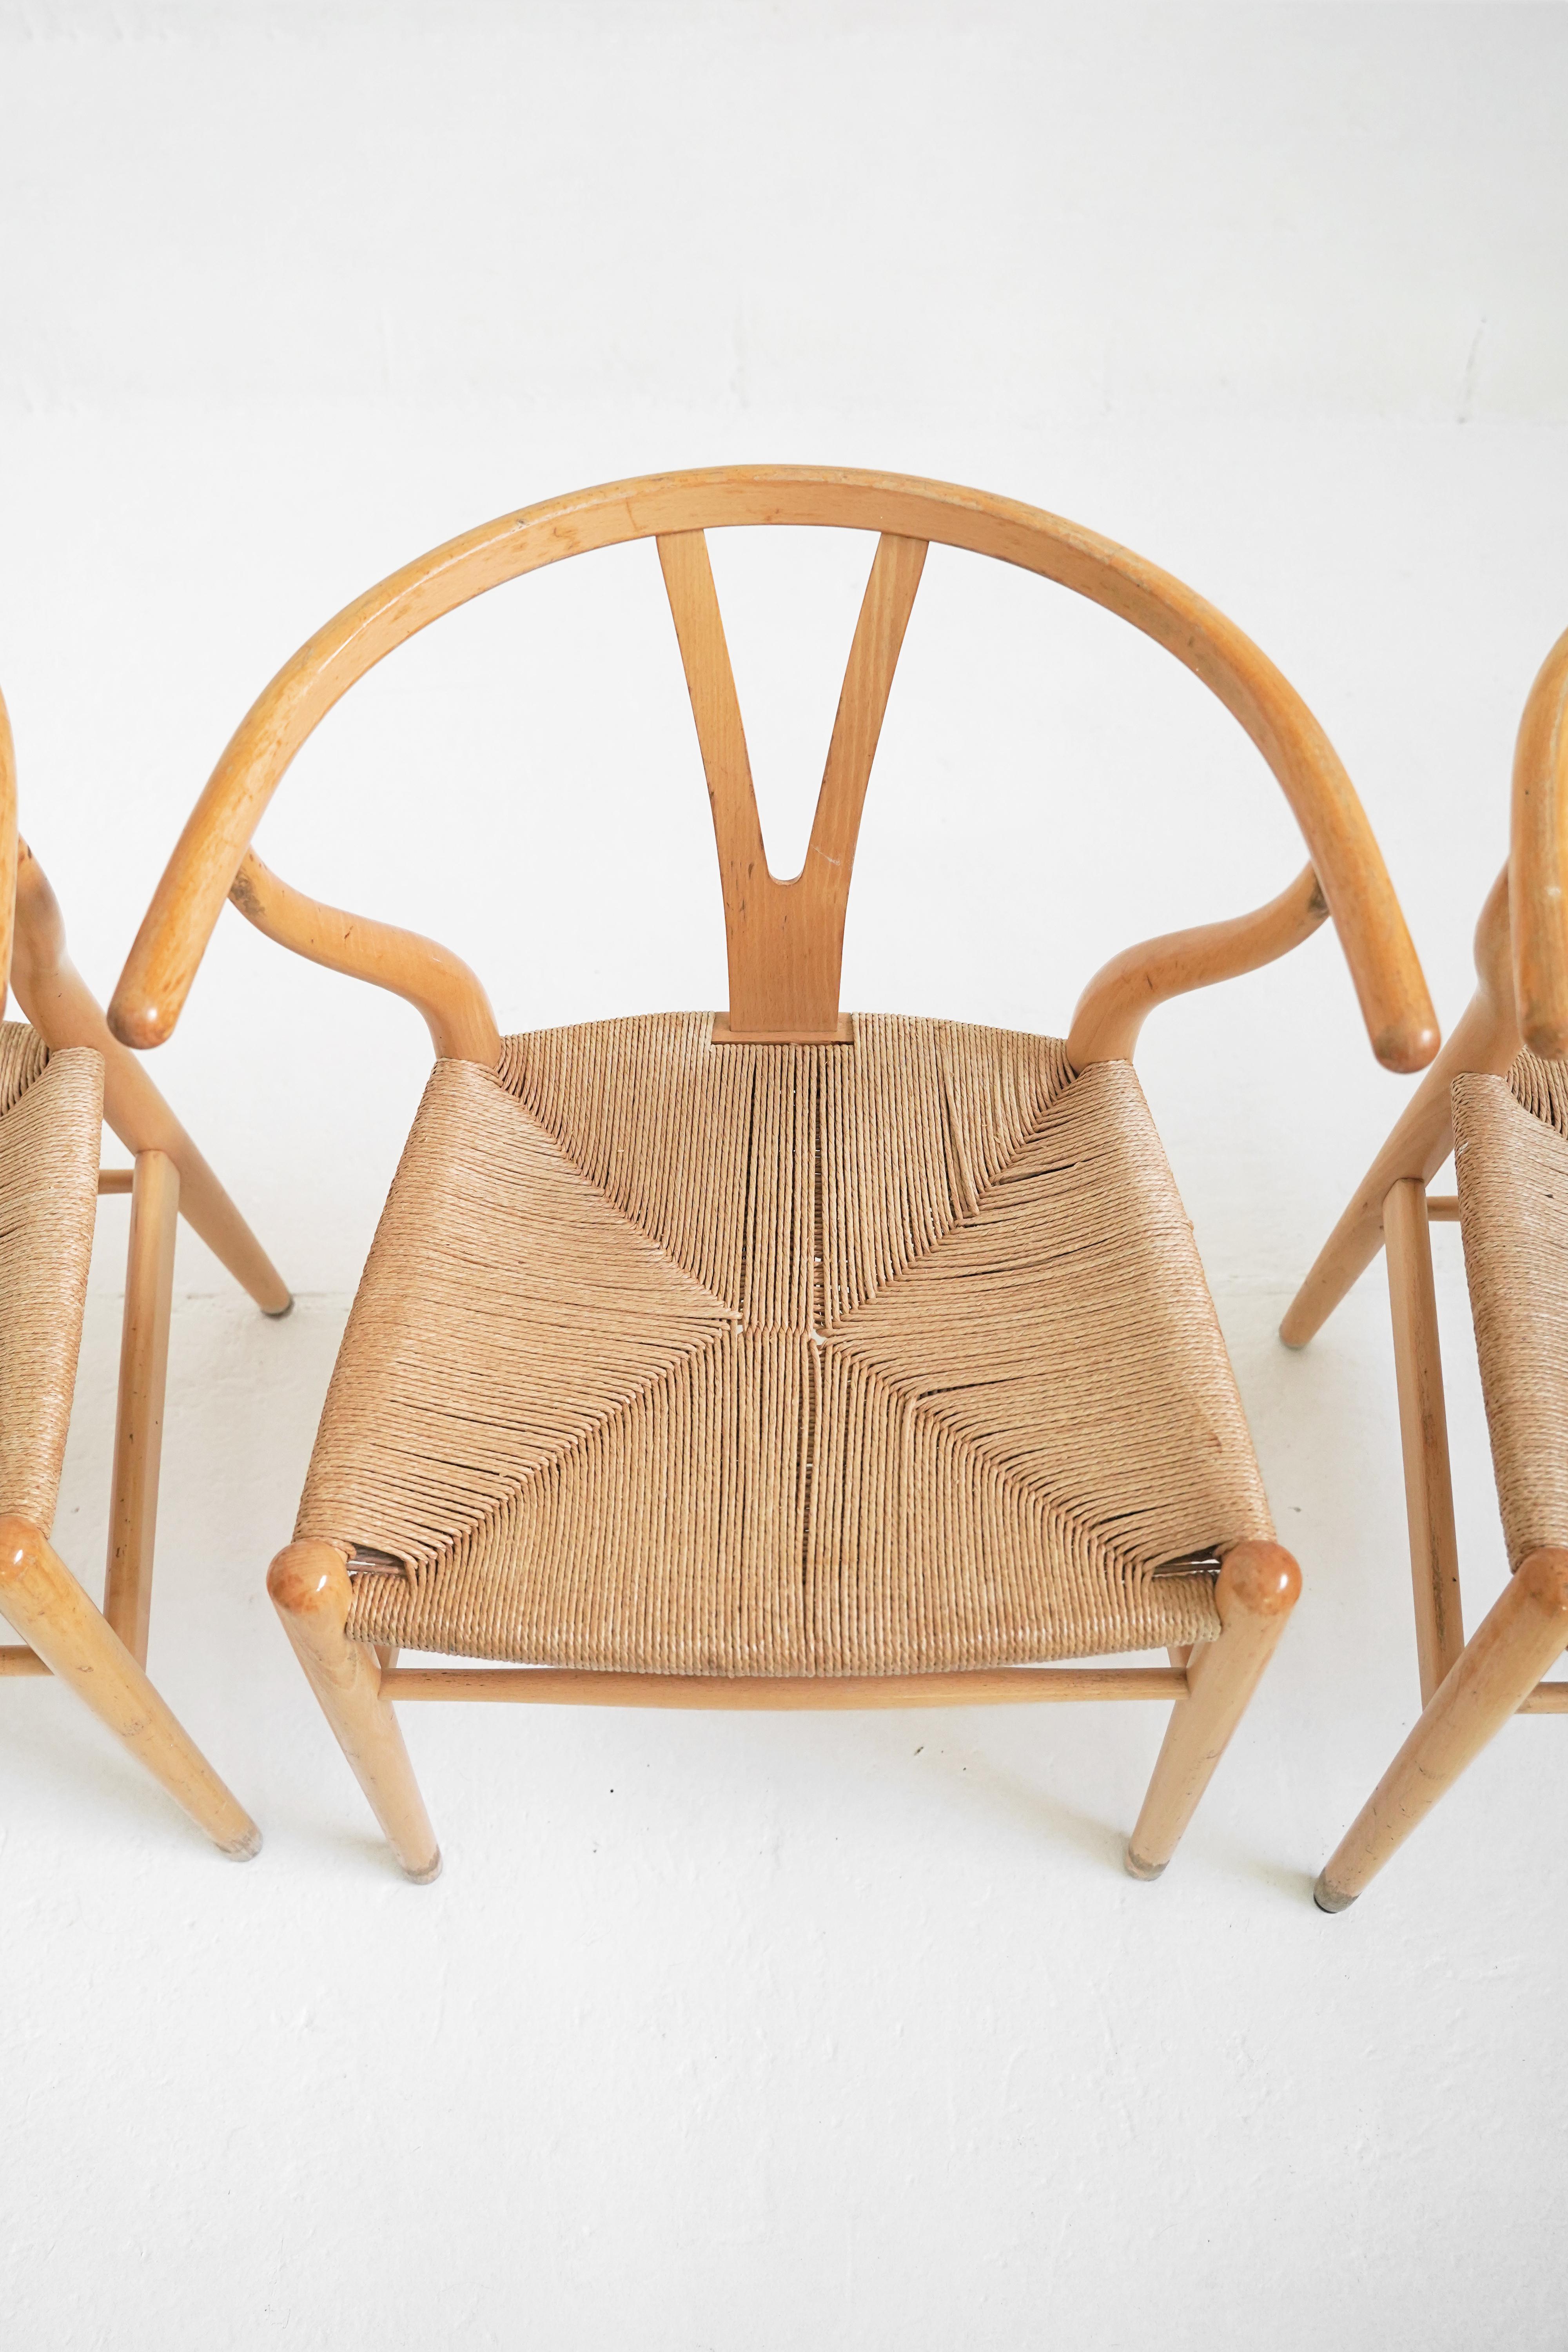 Set of 4 CH24 Wishbone Dining Chairs by Hans Wegner for Carl Hansen & Søn 6